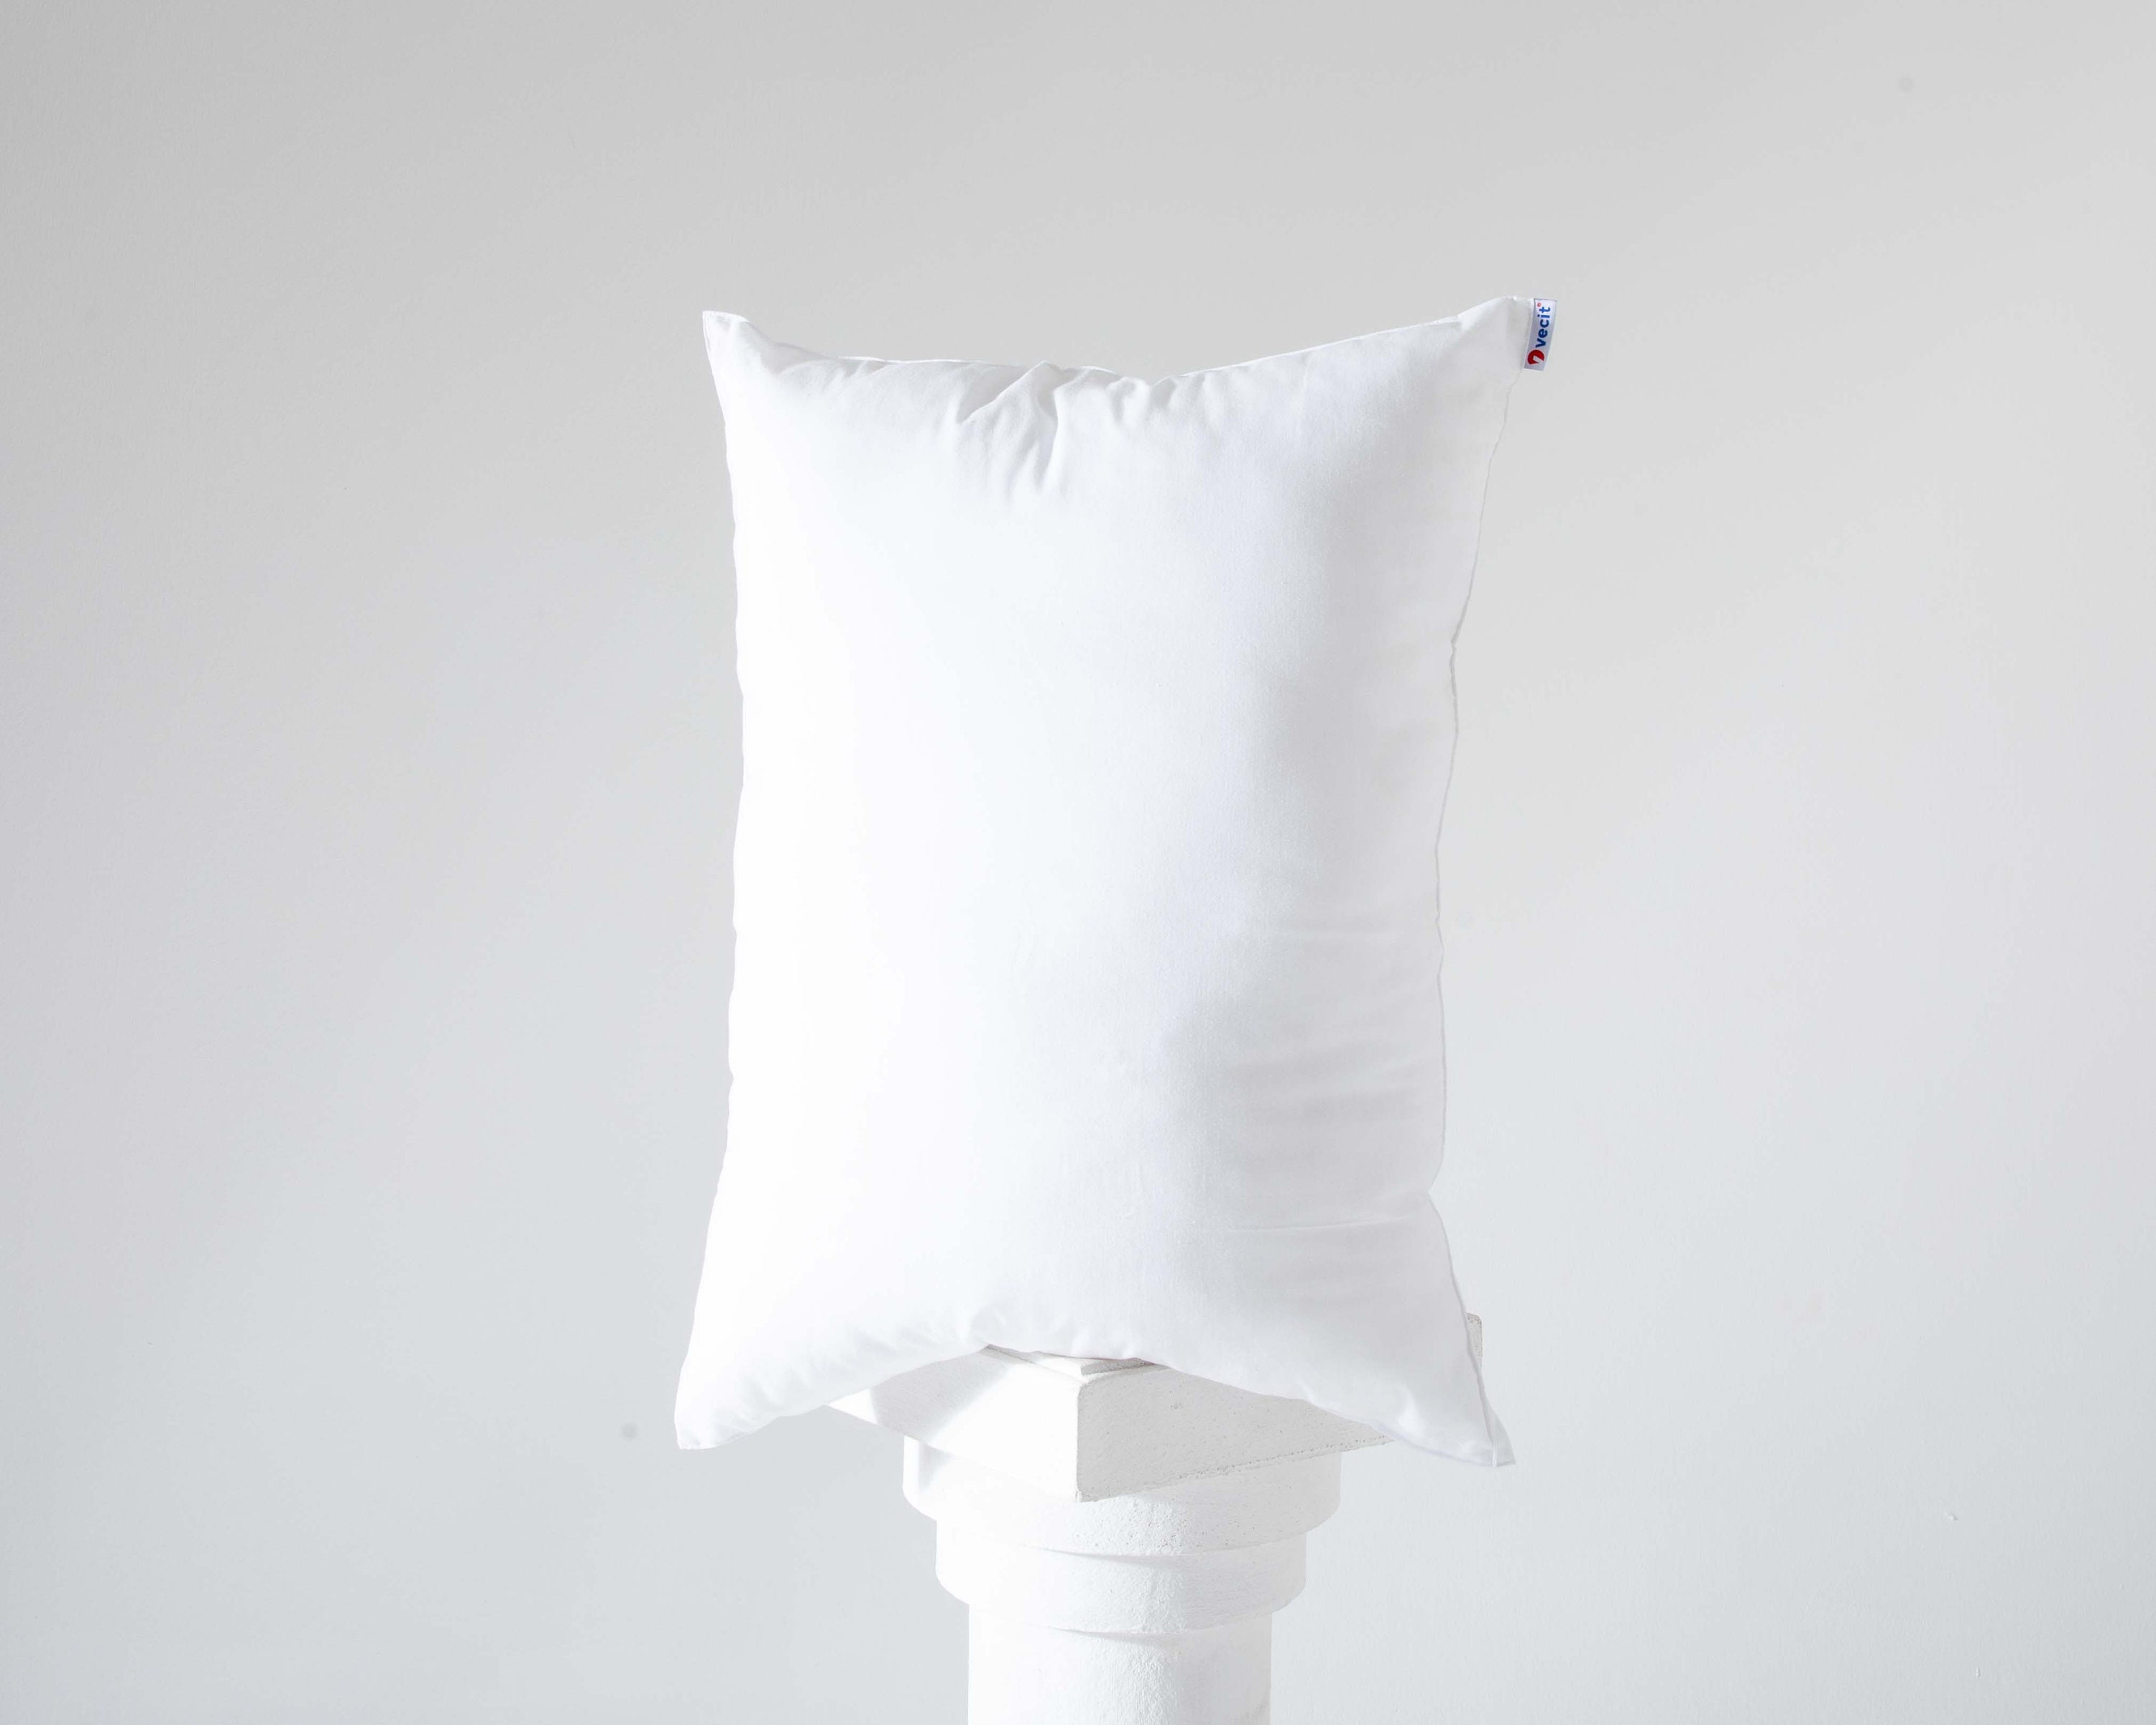 YSTHER Down Feather Throw Pillow Inserts 14x22 Set of 2 Square Form Sham  Stuffer Premium Hypoallergenic Cotton Lumbar White Decorative Sofa Cushion